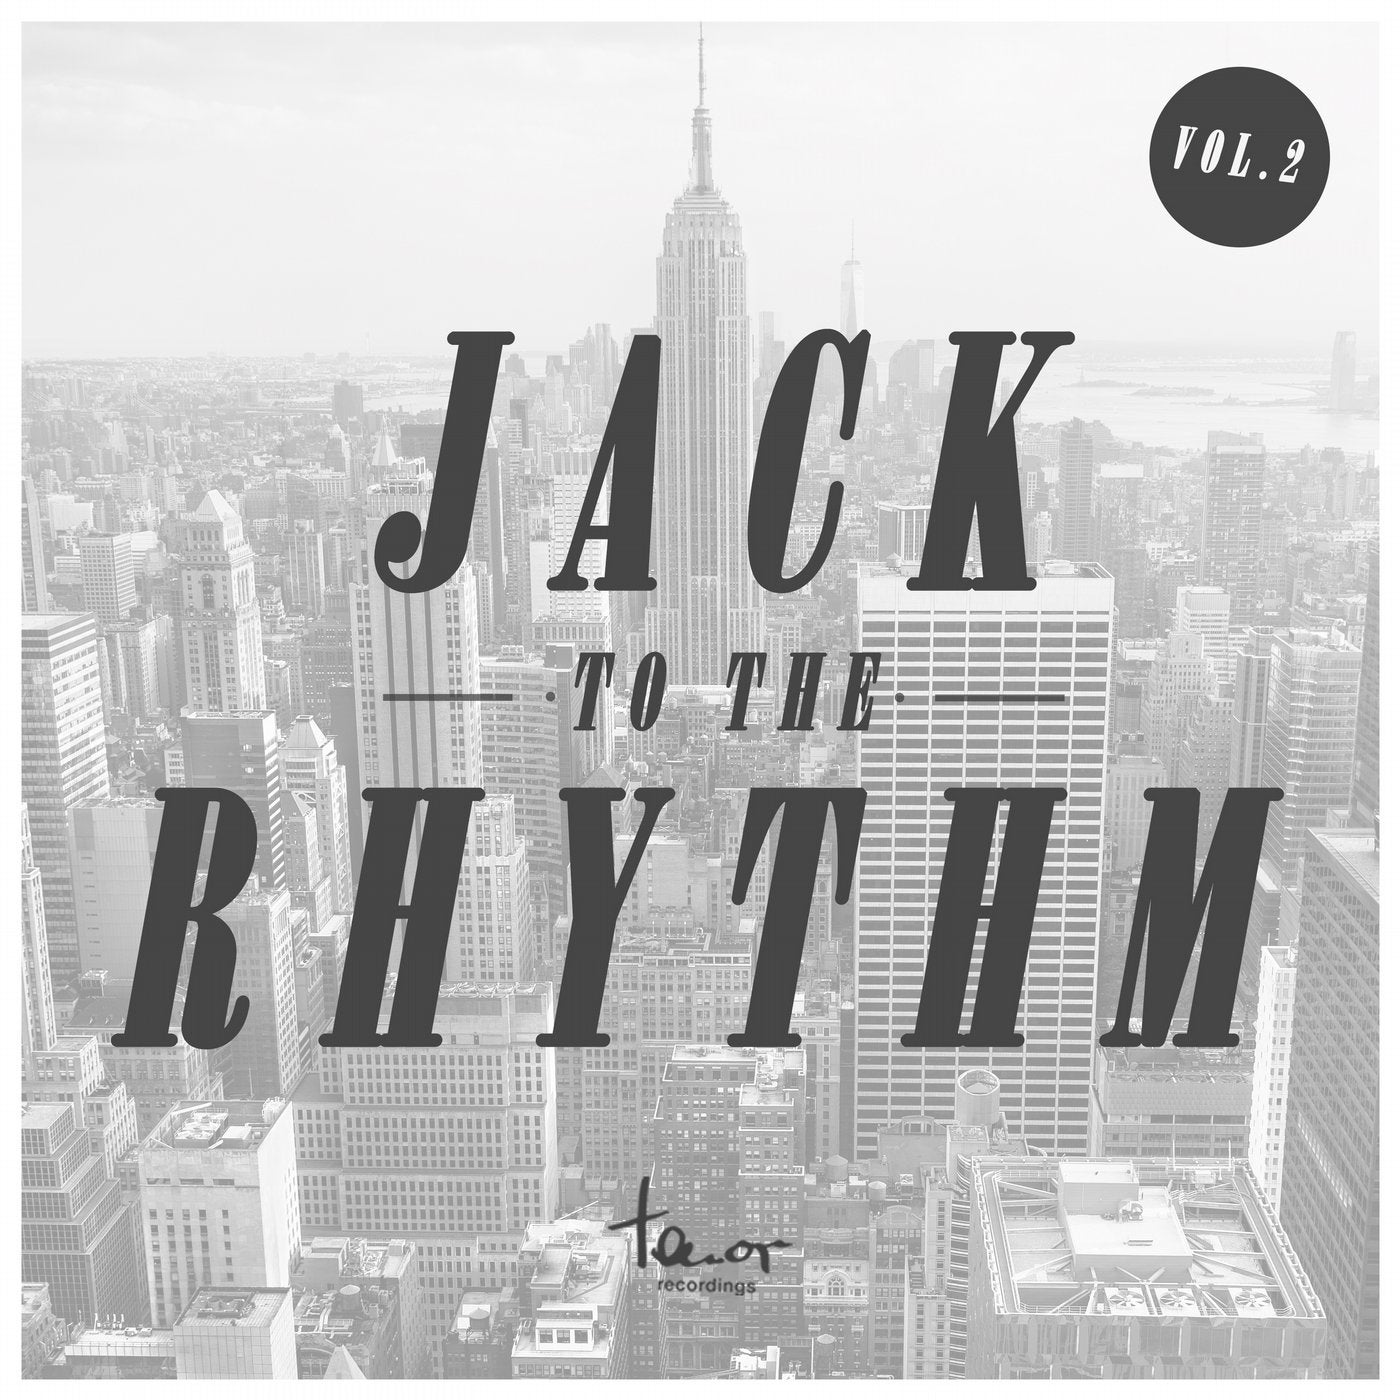 Jack to the Rhythm, Vol. 2